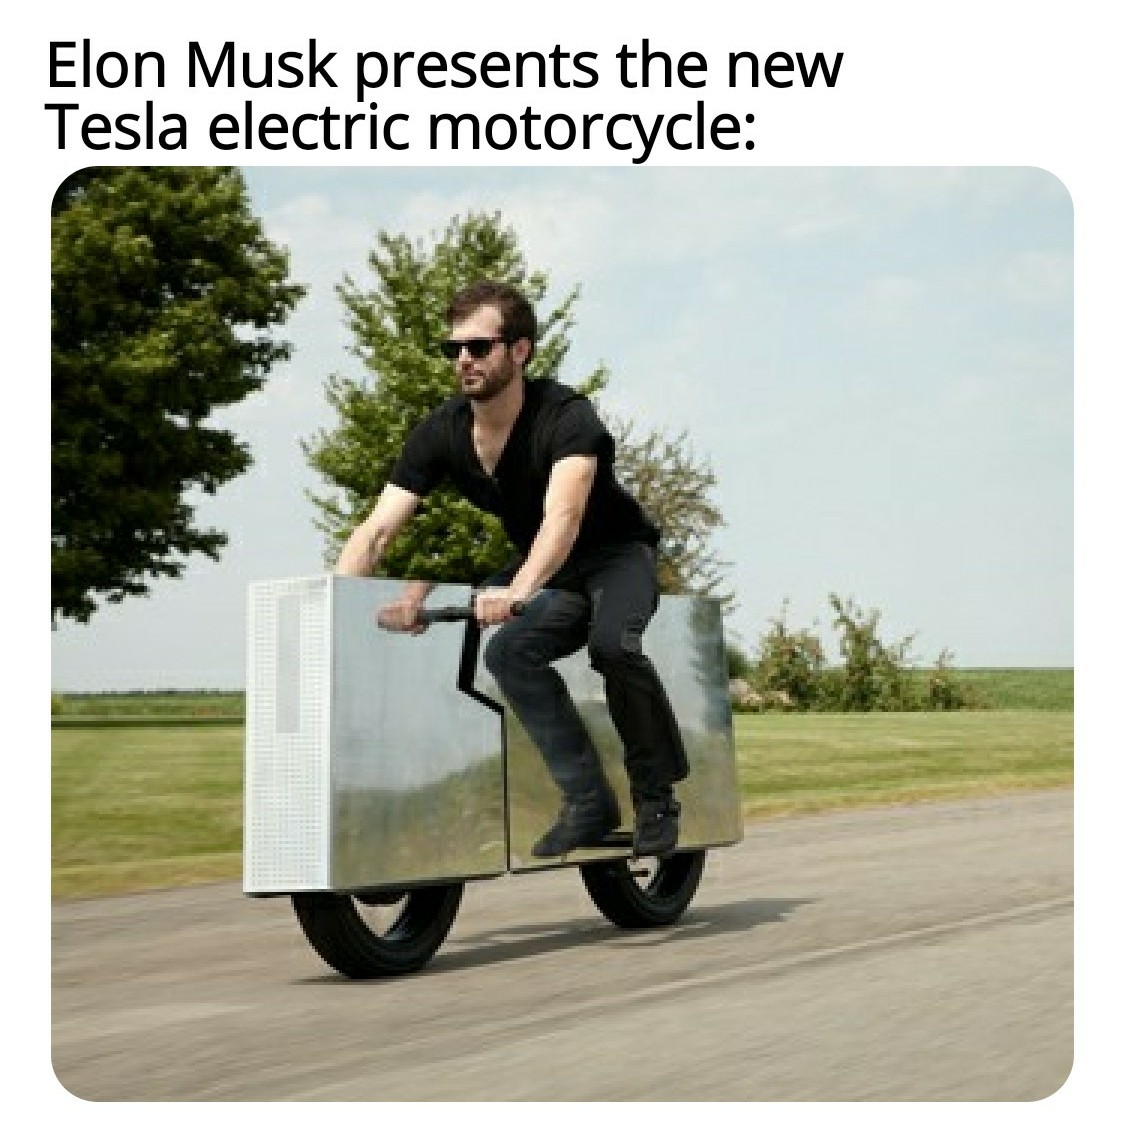 moto undone - Elon Musk presents the new Tesla electric motorcycle